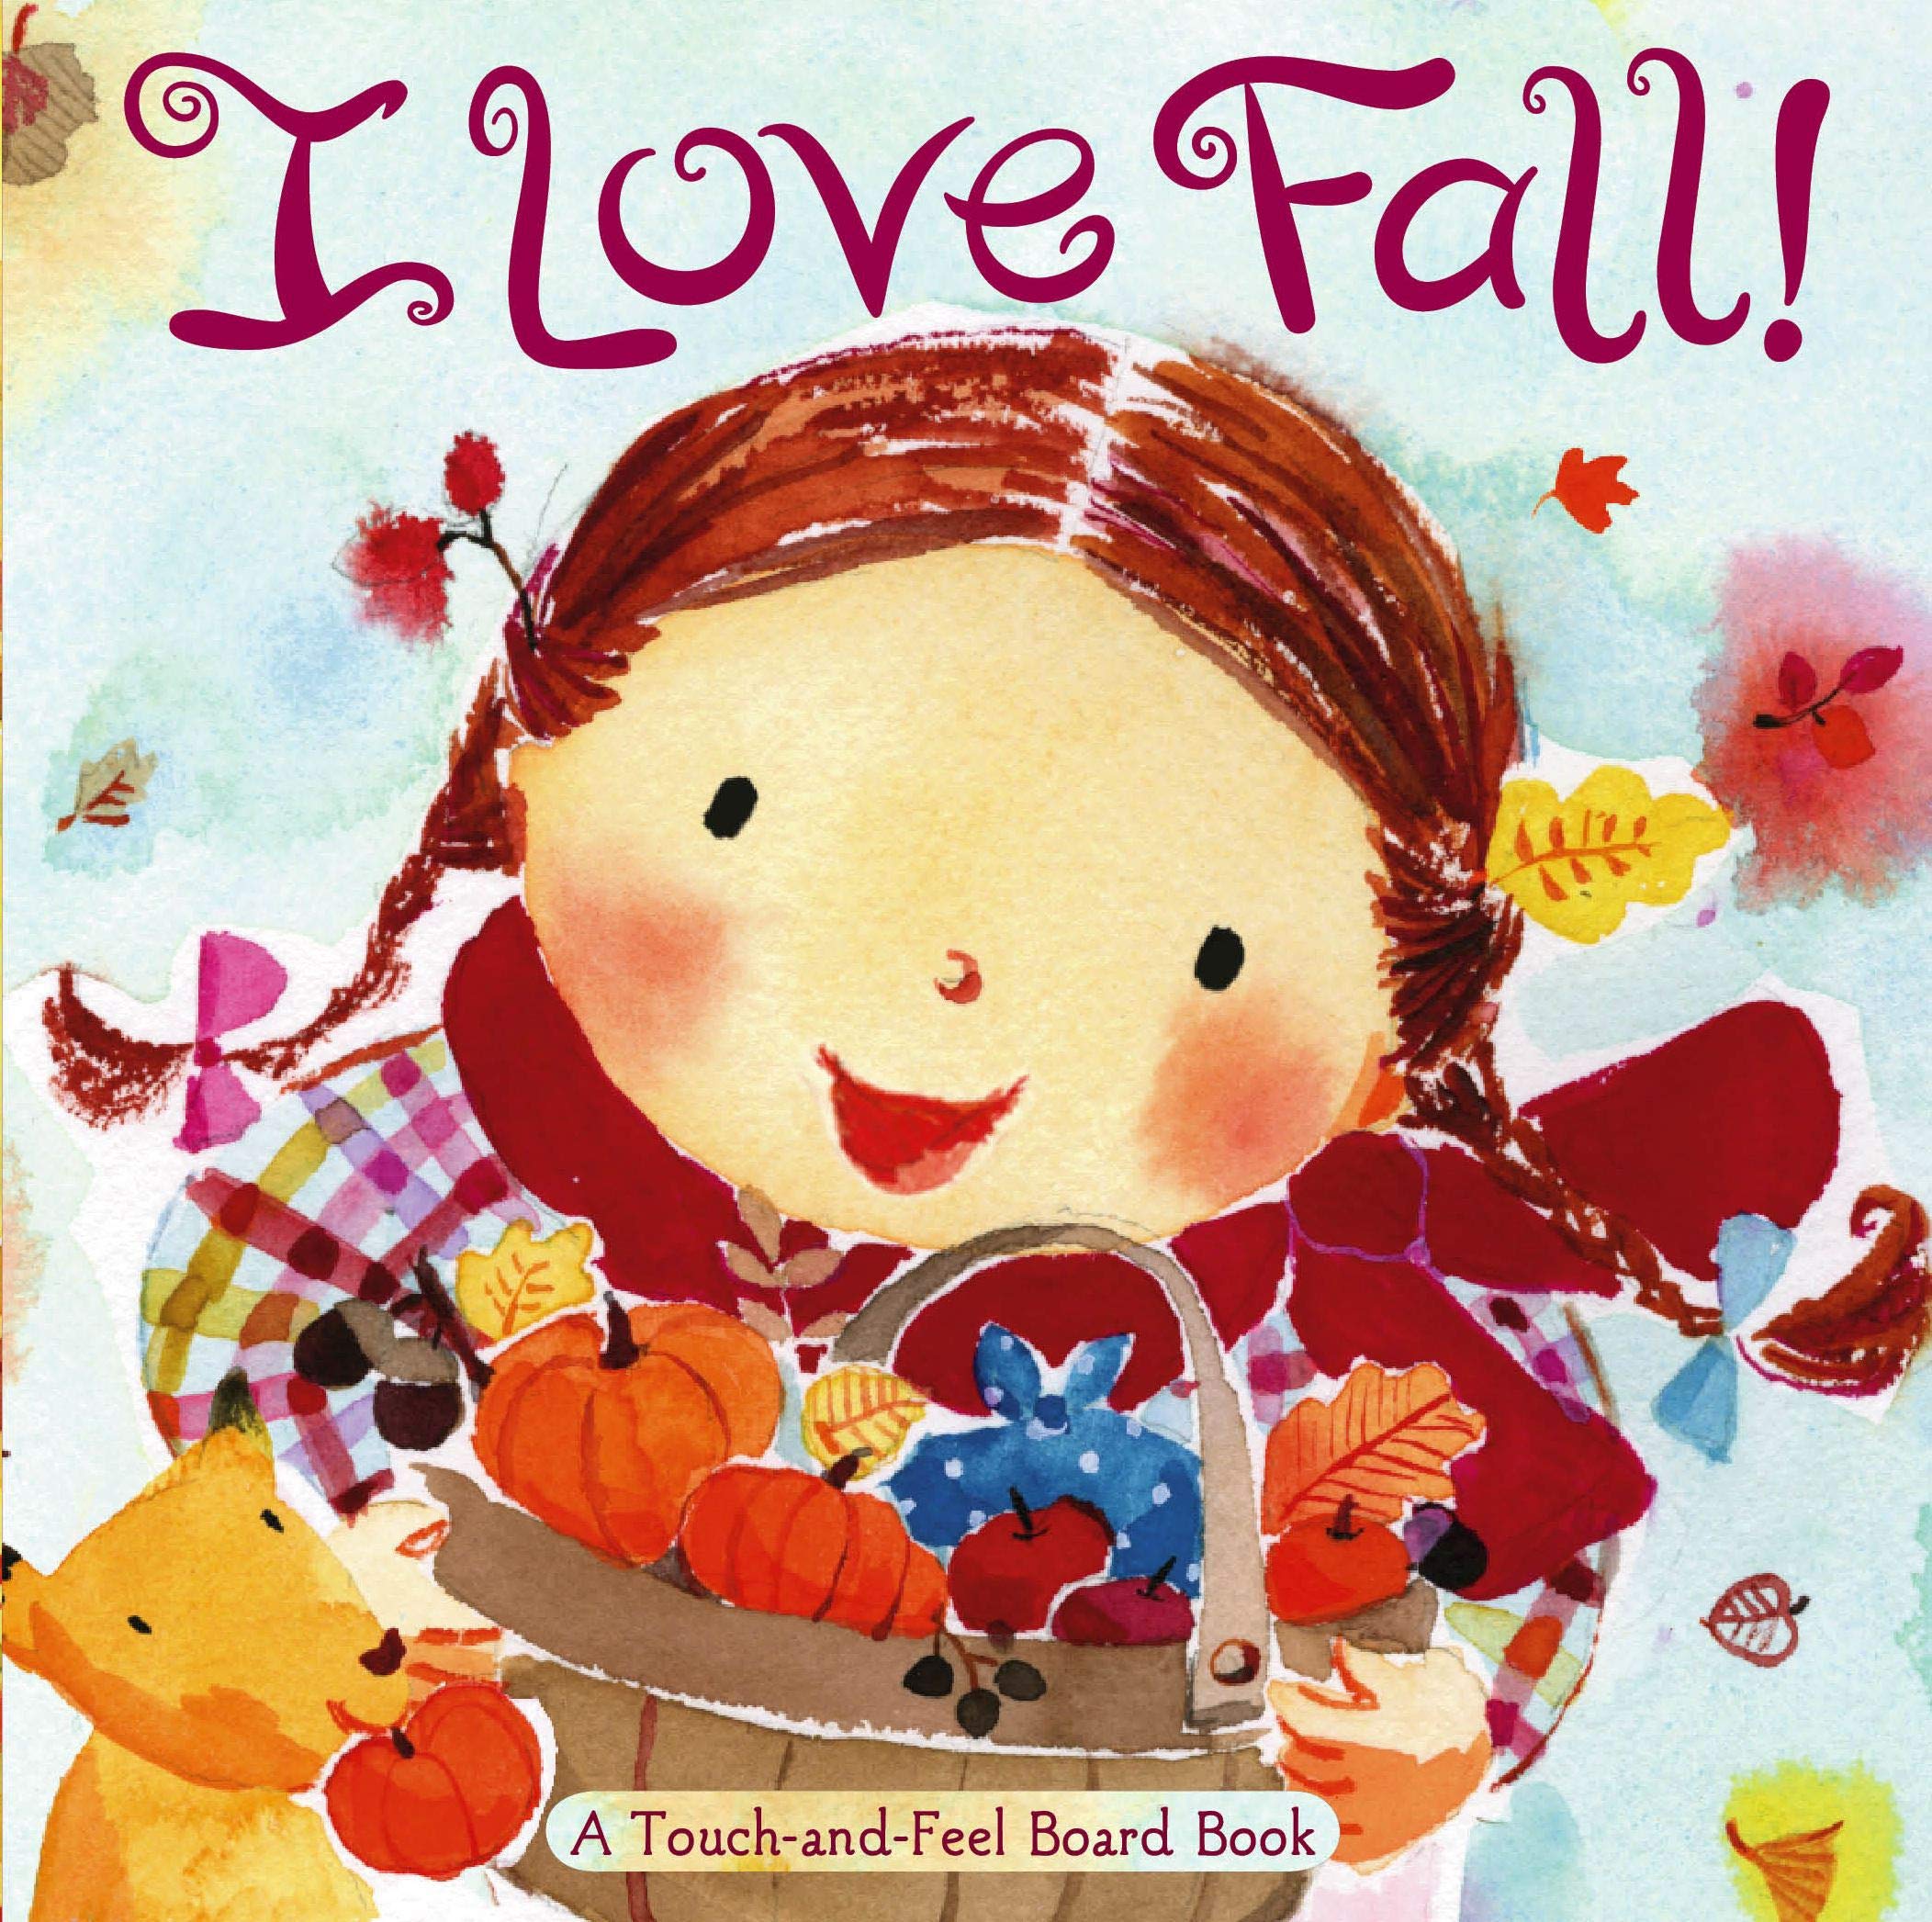 I Love Fall!